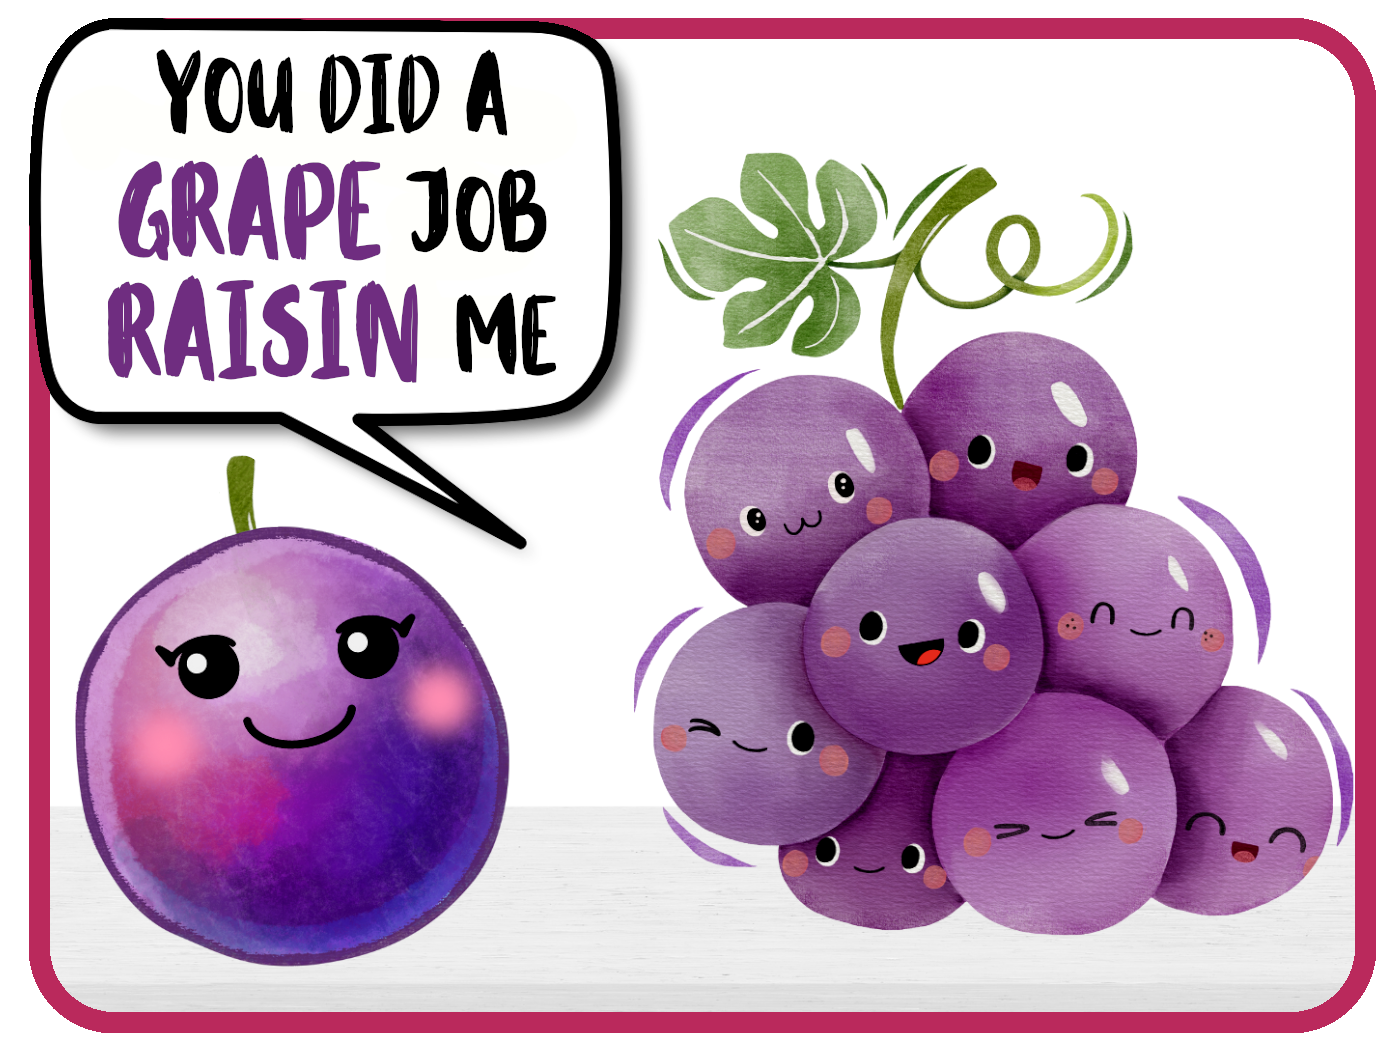 Grape Job Raisin Me